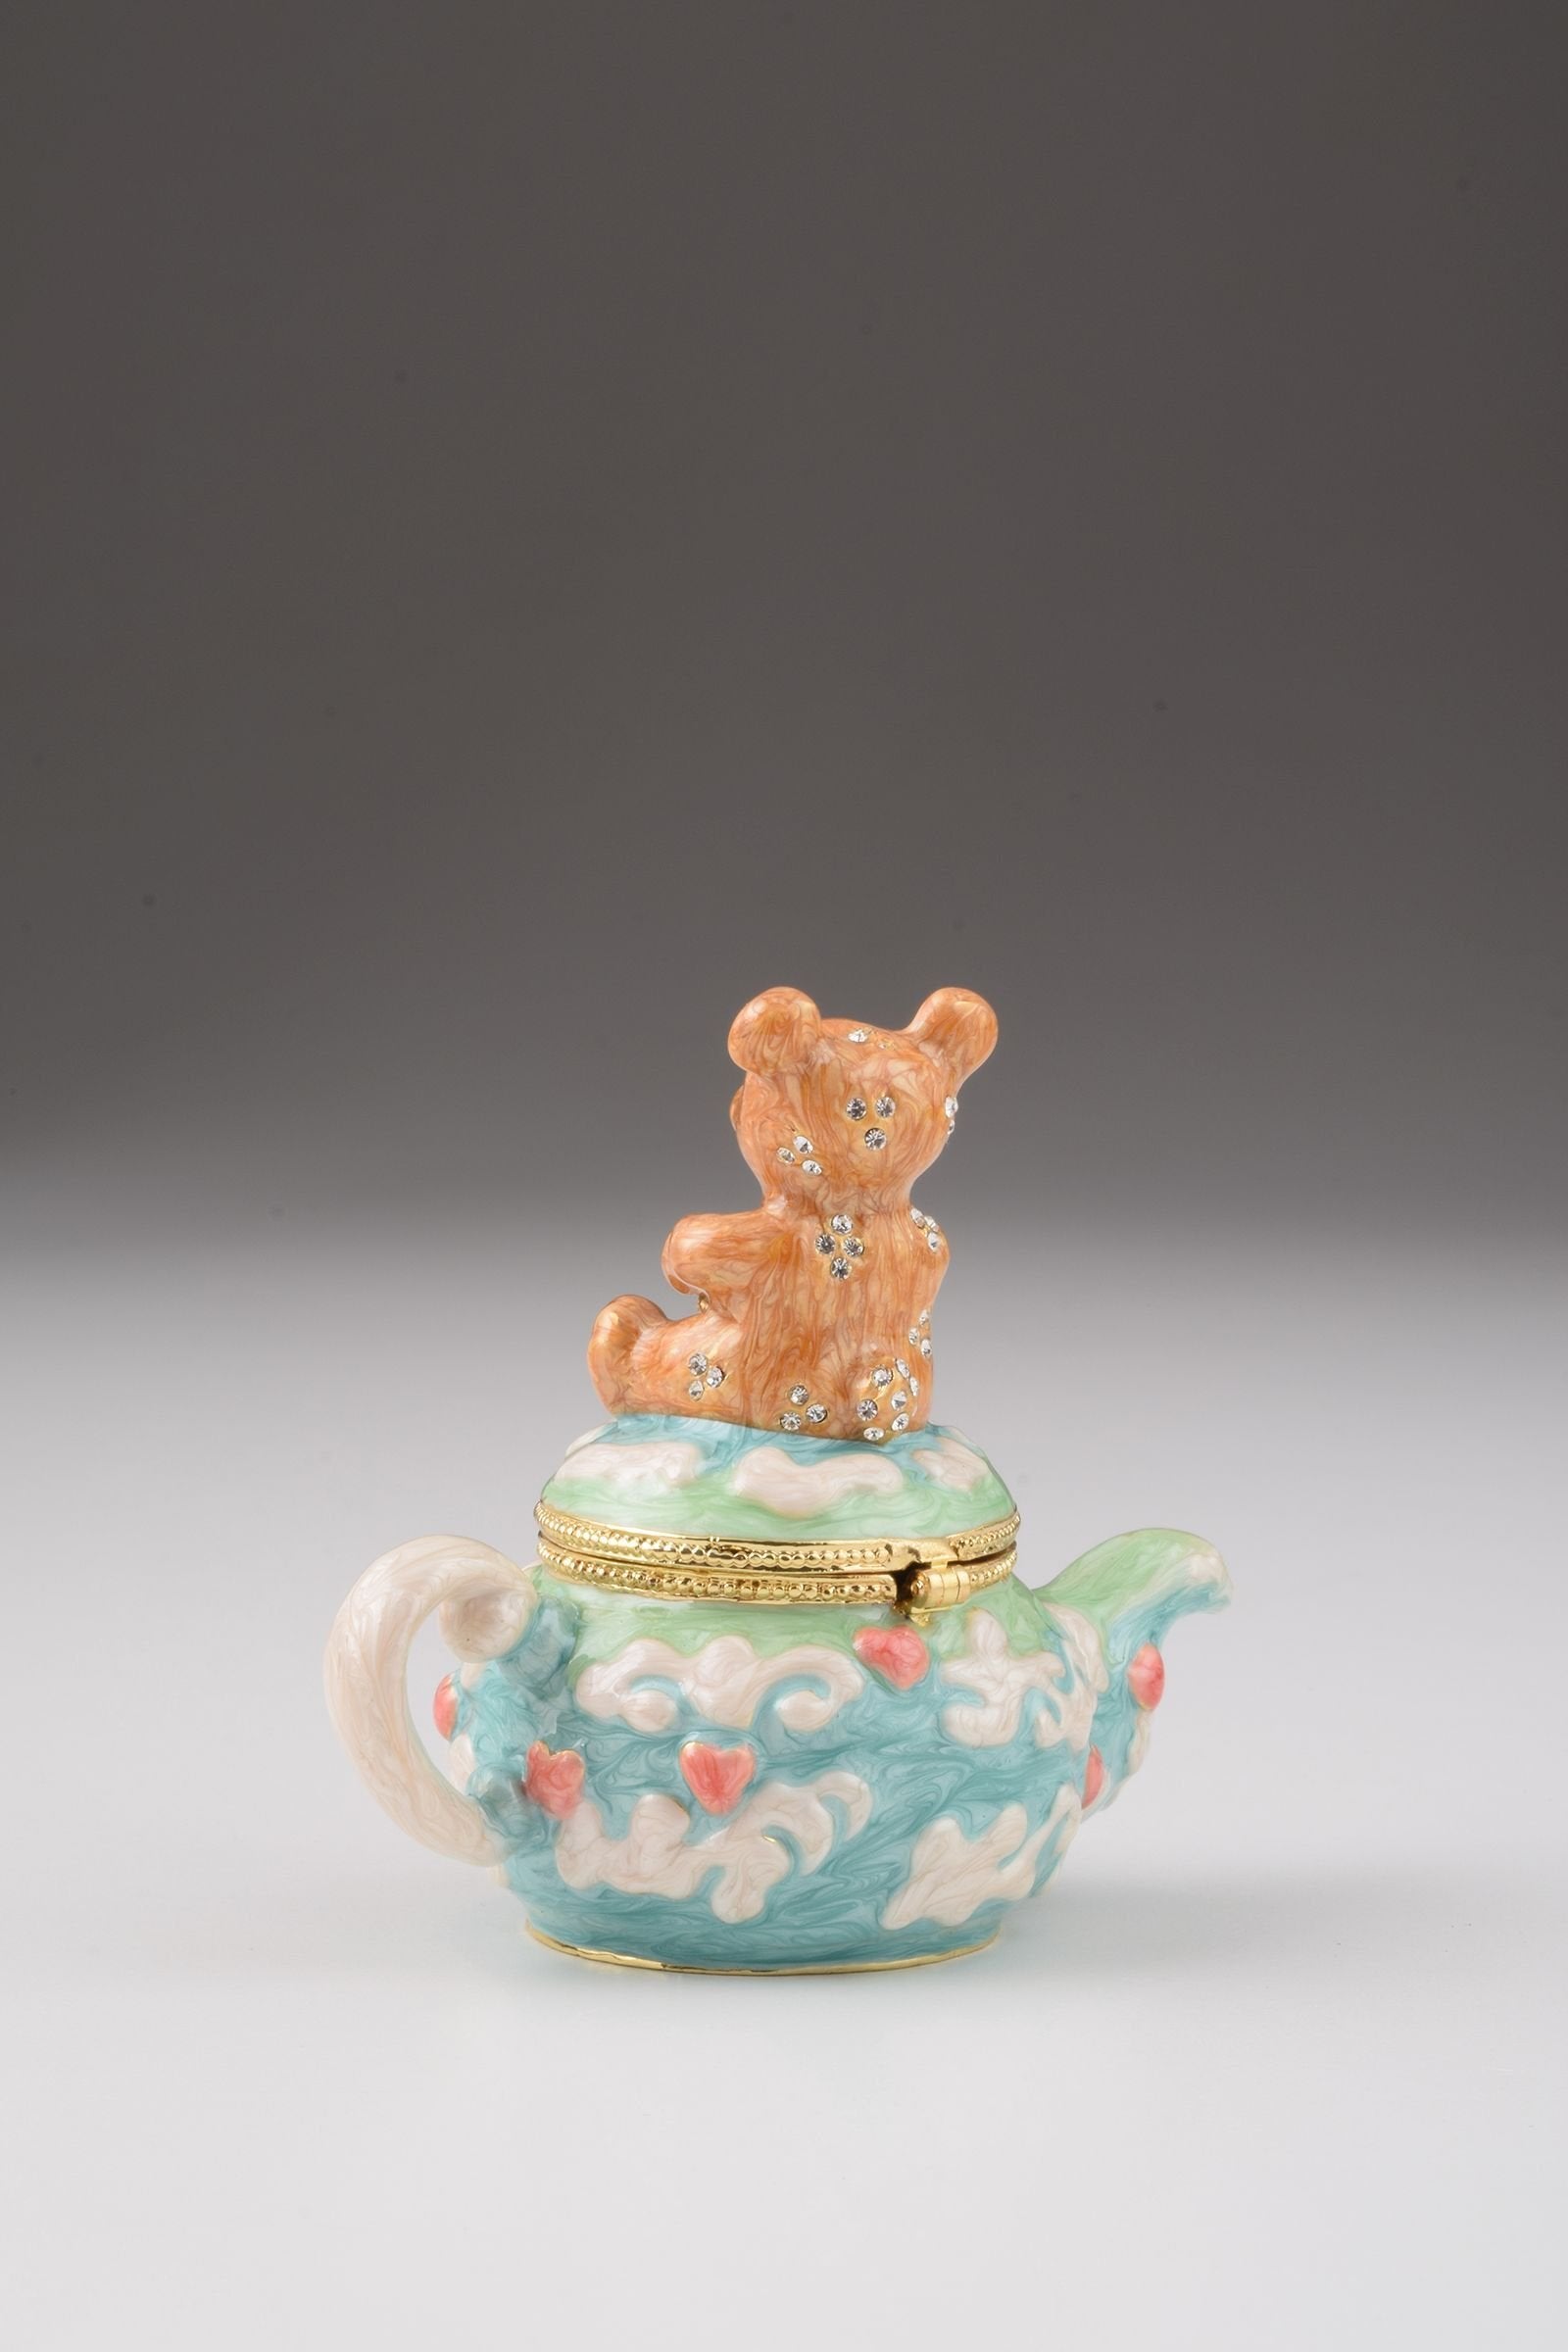 Keren Kopal Teddy Bear Sitting on a Teapot  89.00